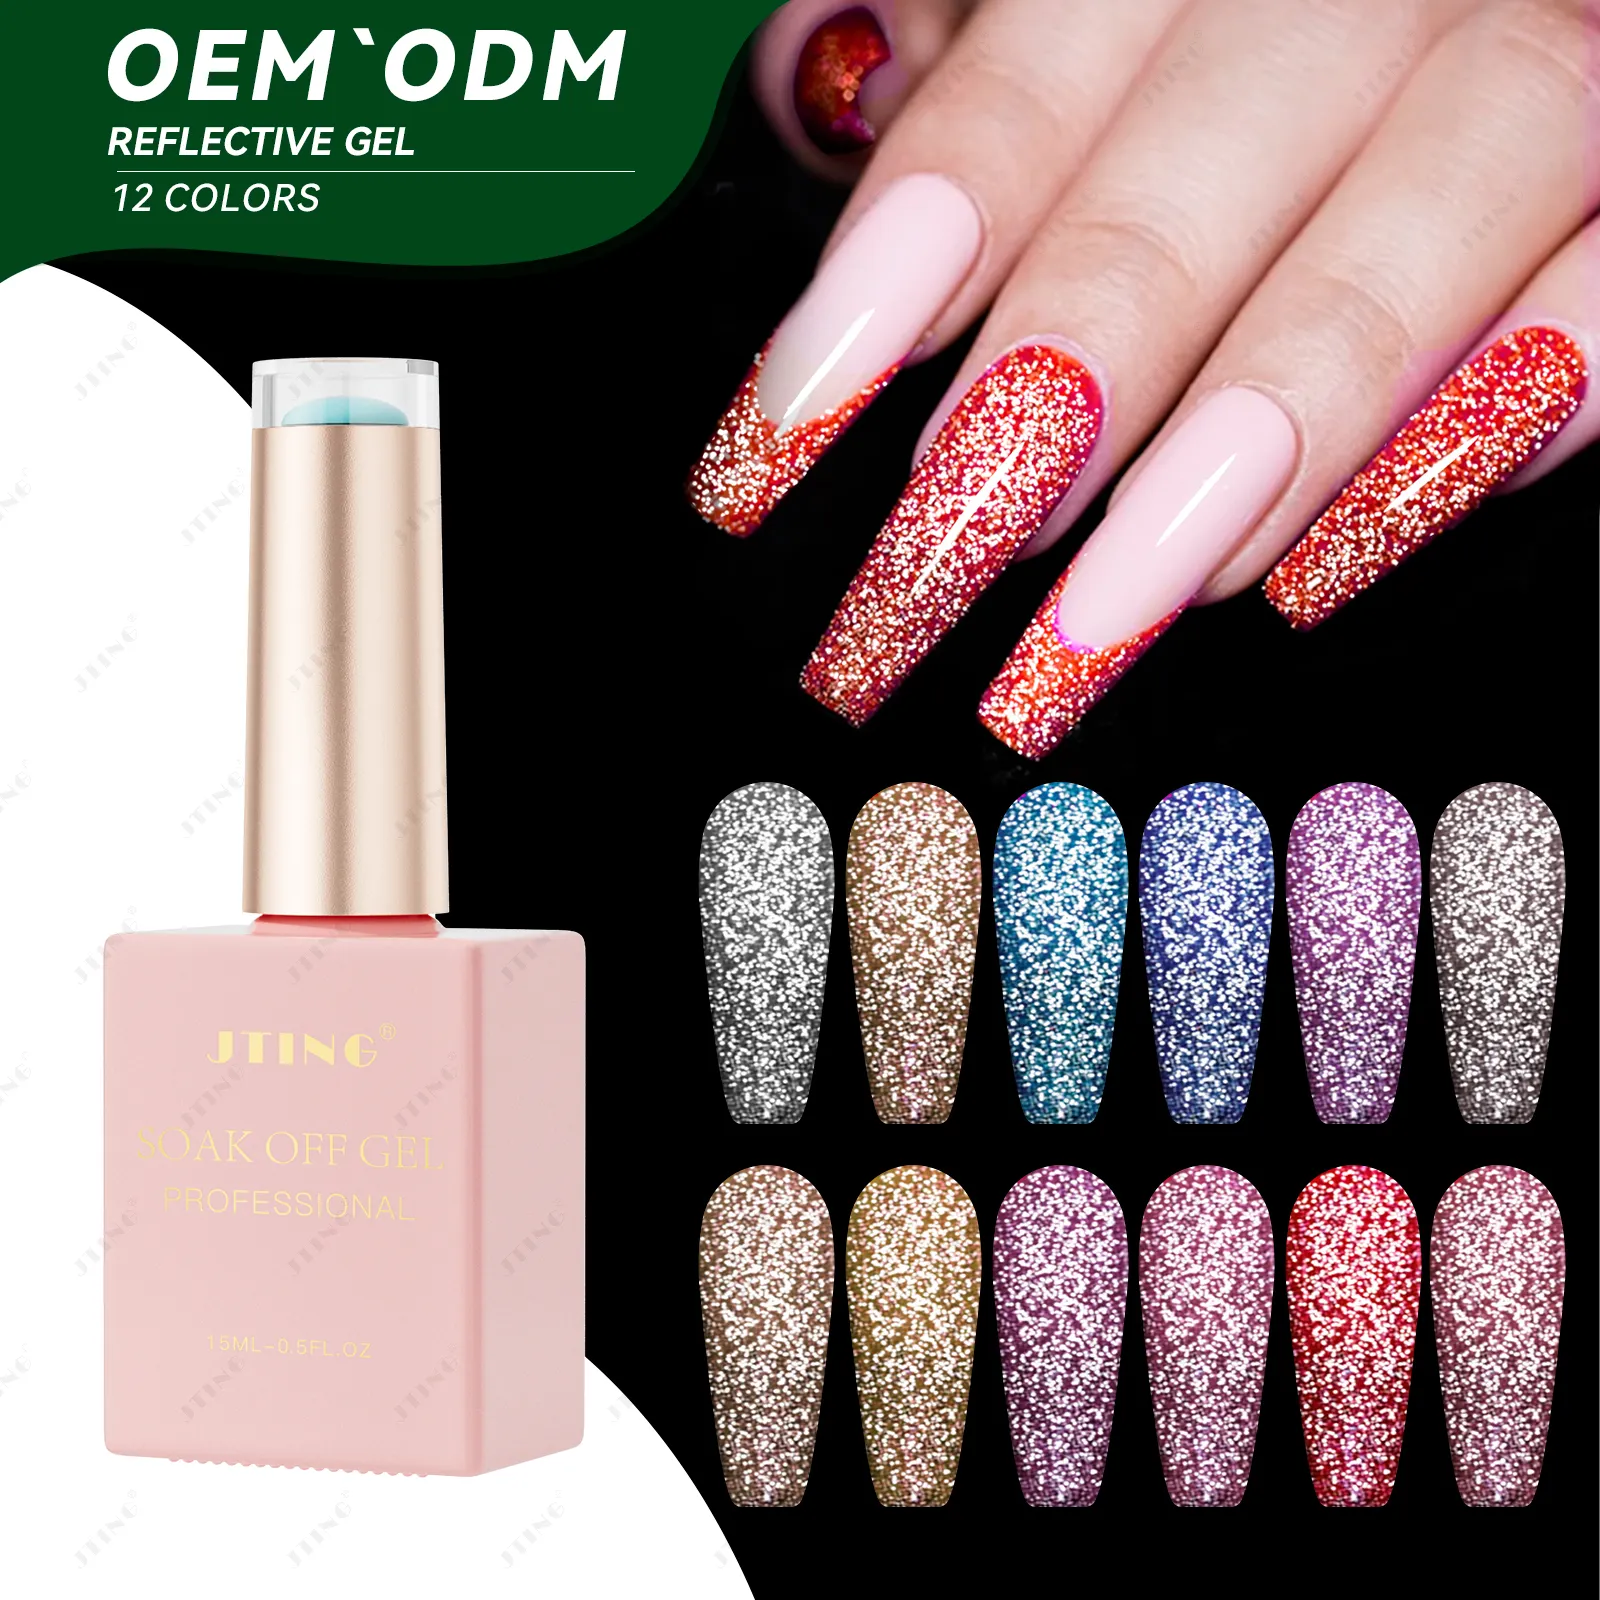 JTING Nail supplies free custom design 12colors esmalte reflective vernis gel OEM disco diamond glitter flash gel nail polish